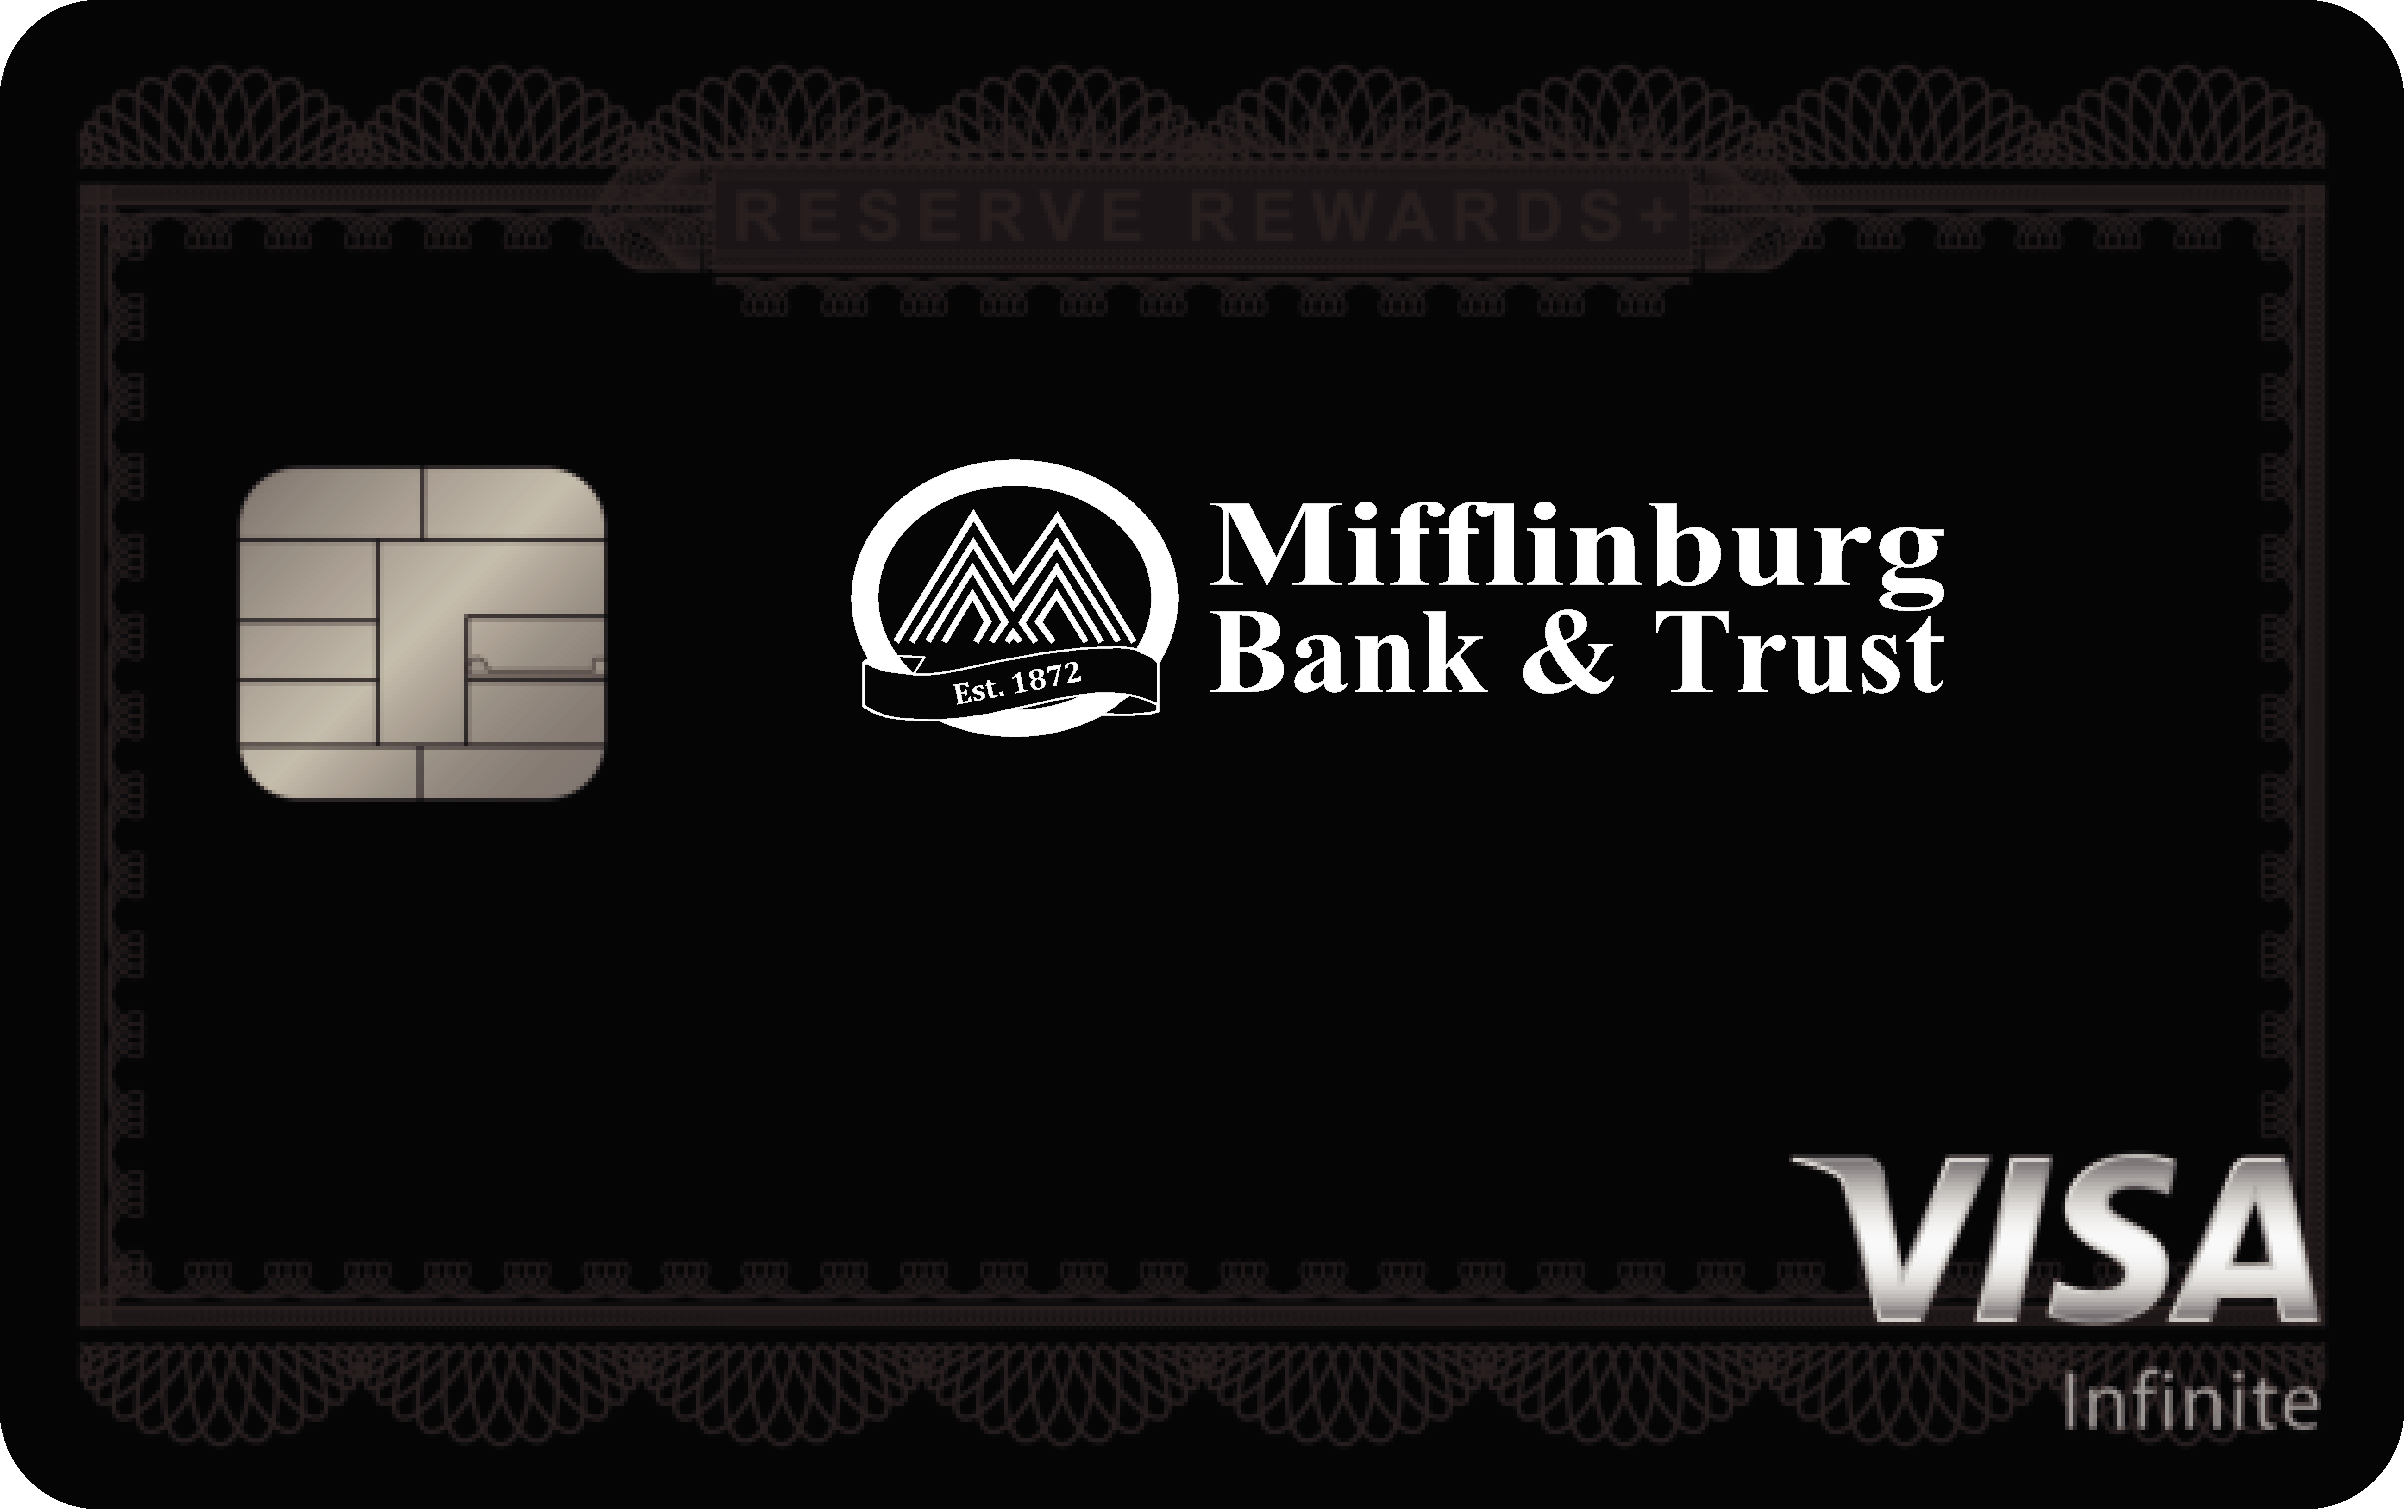 Mifflinburg Bank & Trust Reserve Rewards+ Card